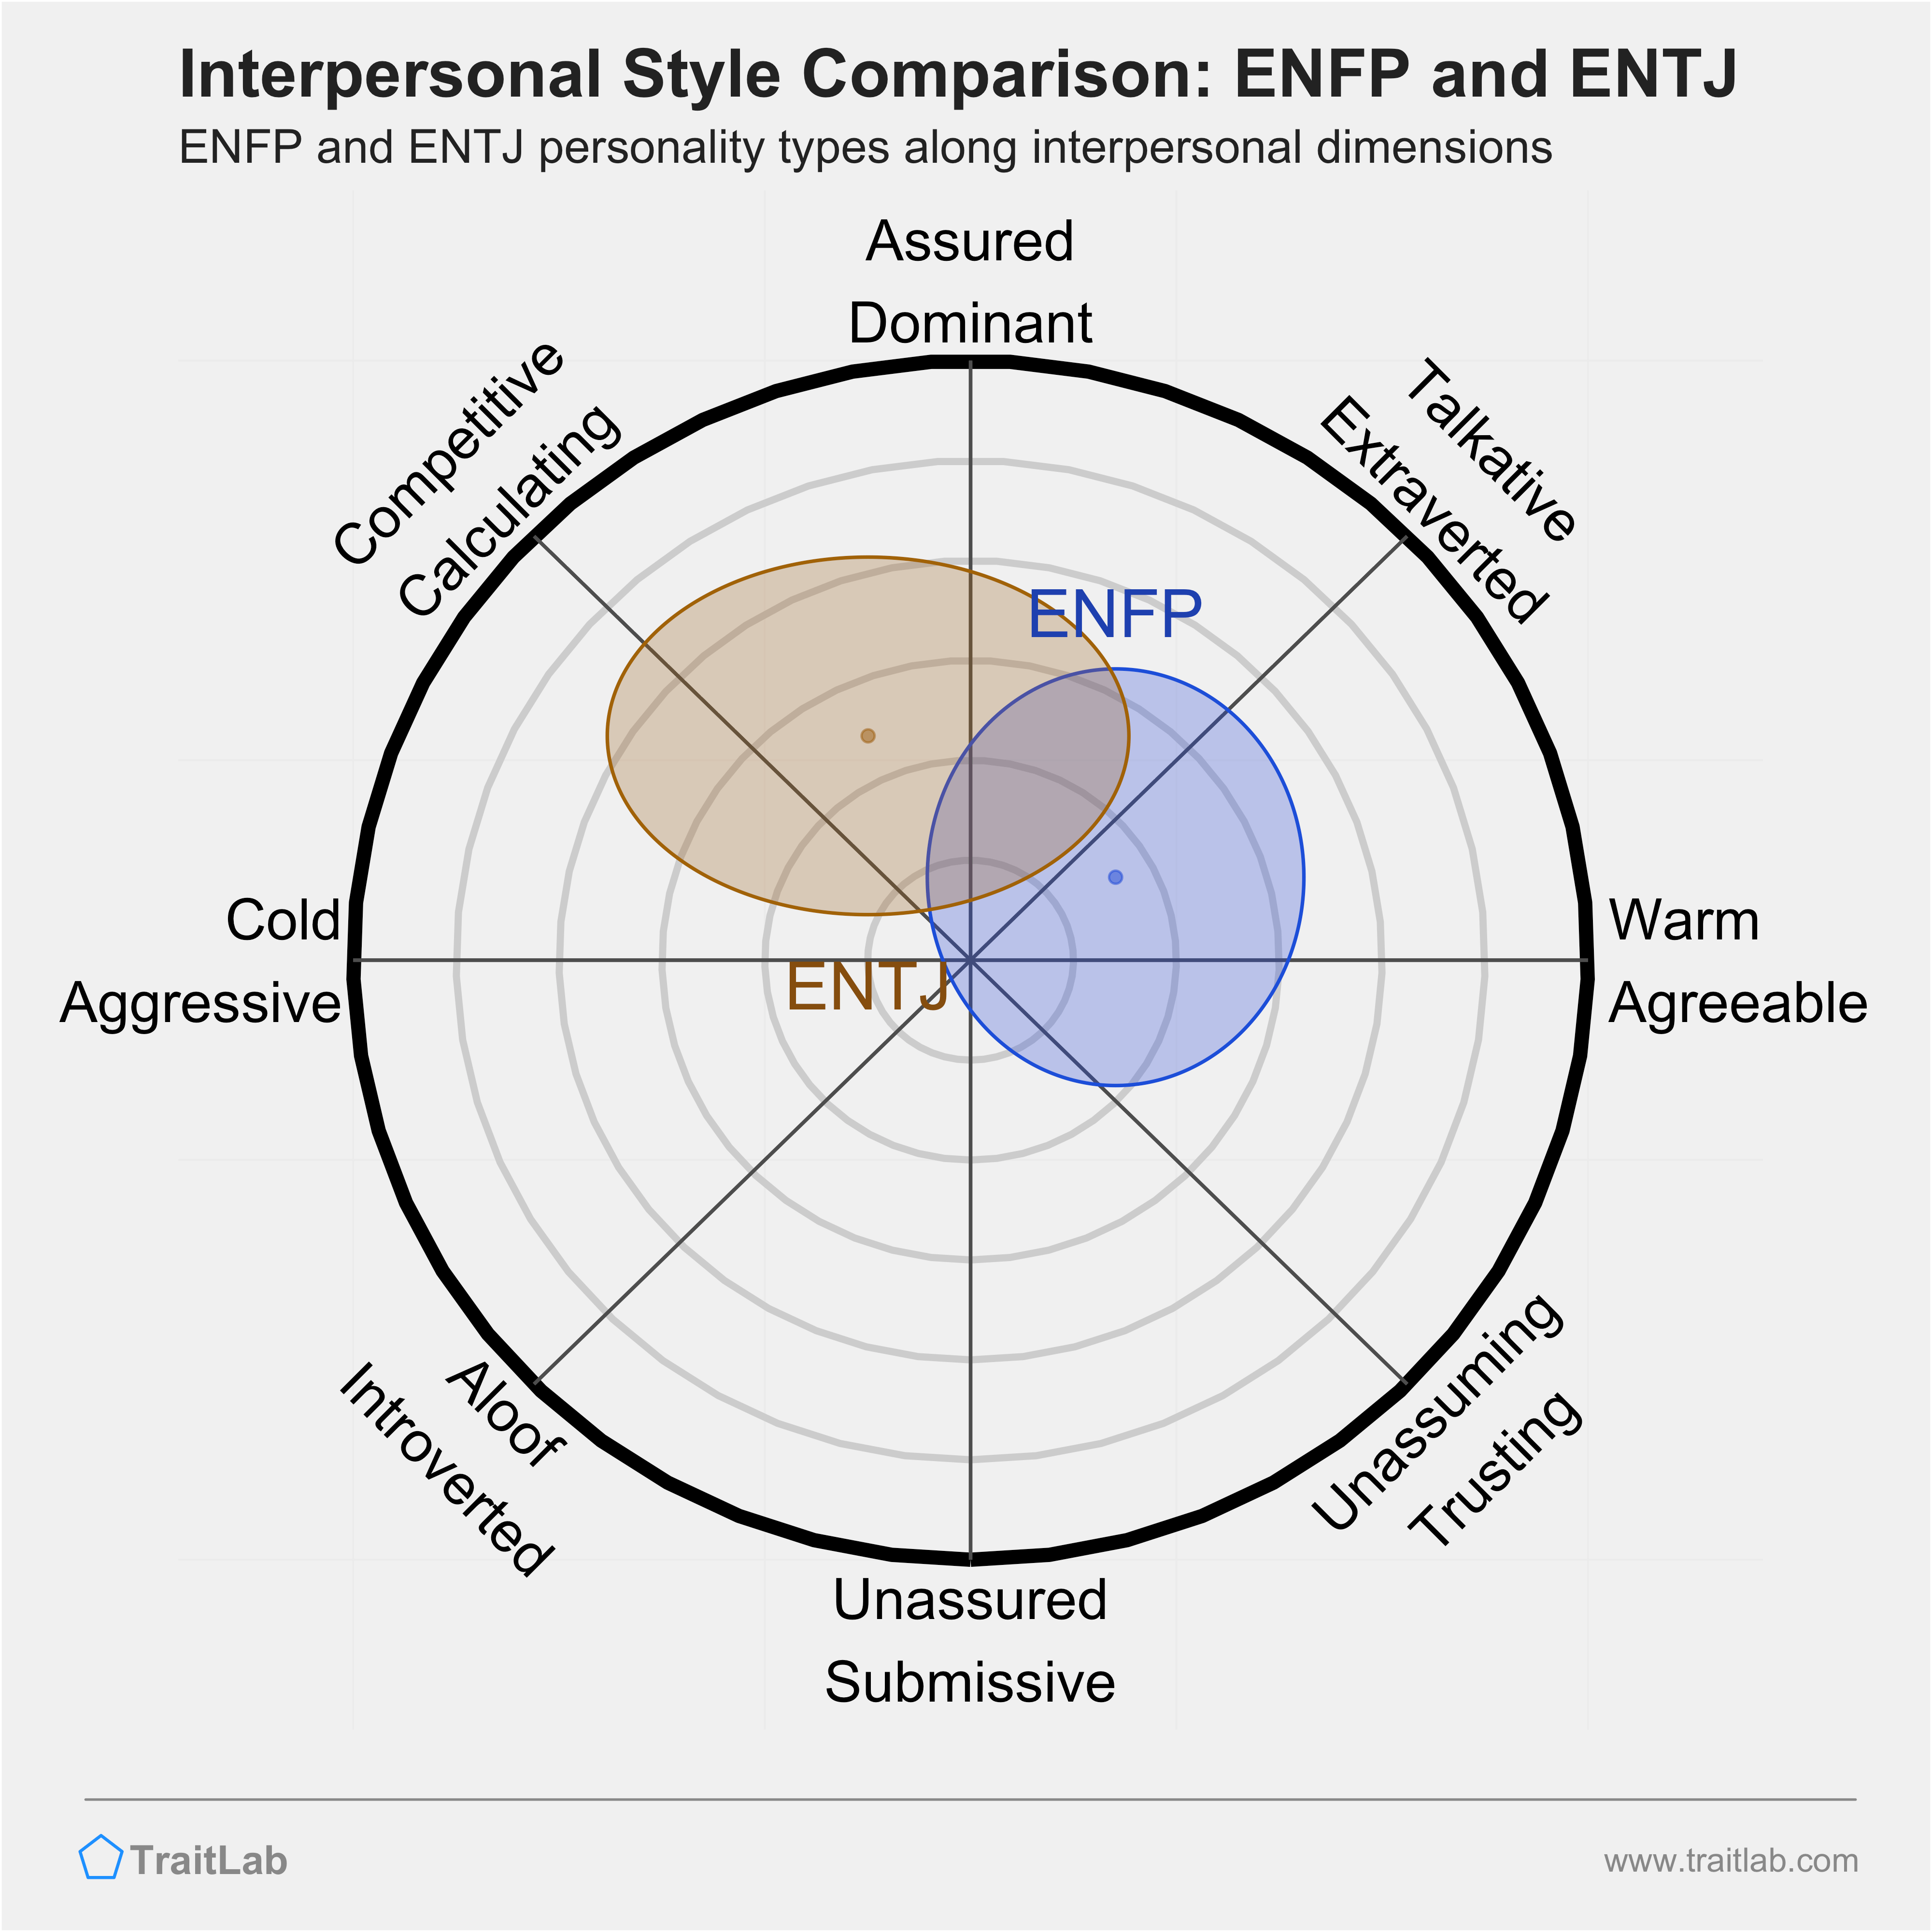 ENFP and ENTJ comparison across interpersonal dimensions